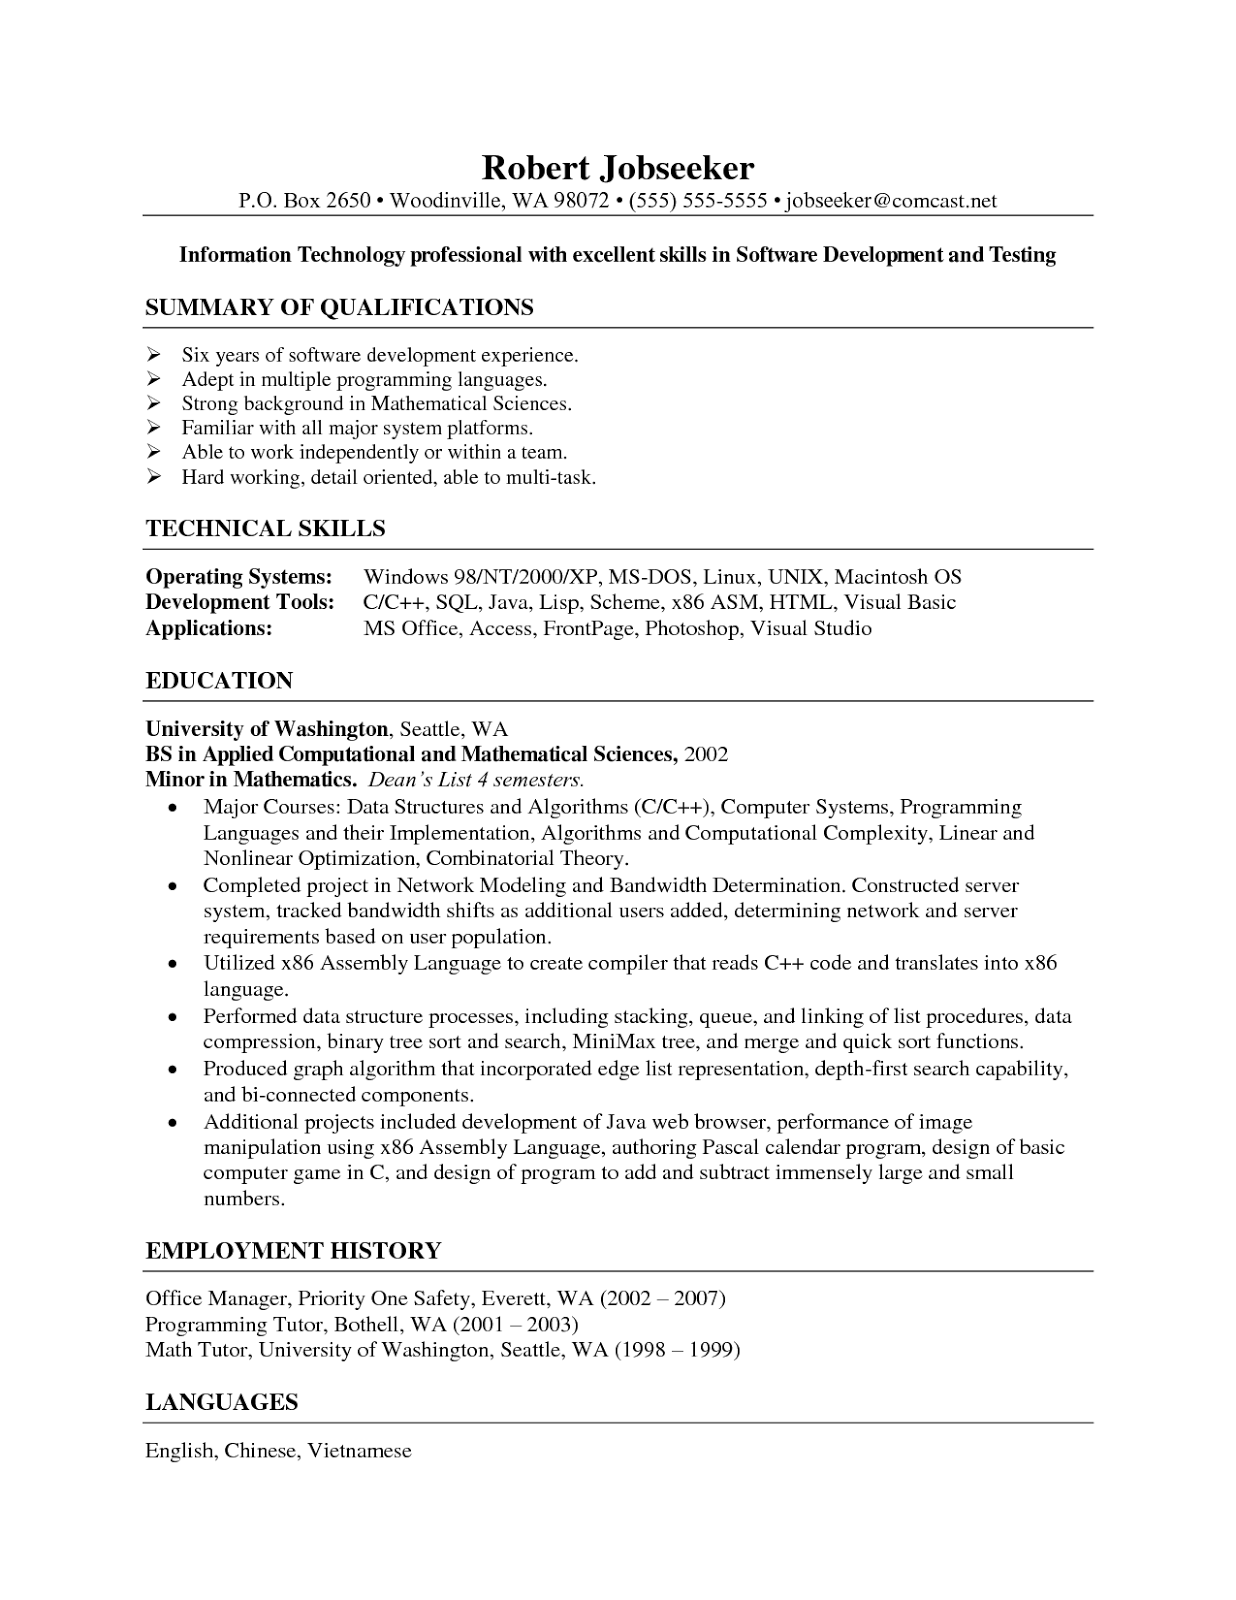 Sample cover letter attaching resume